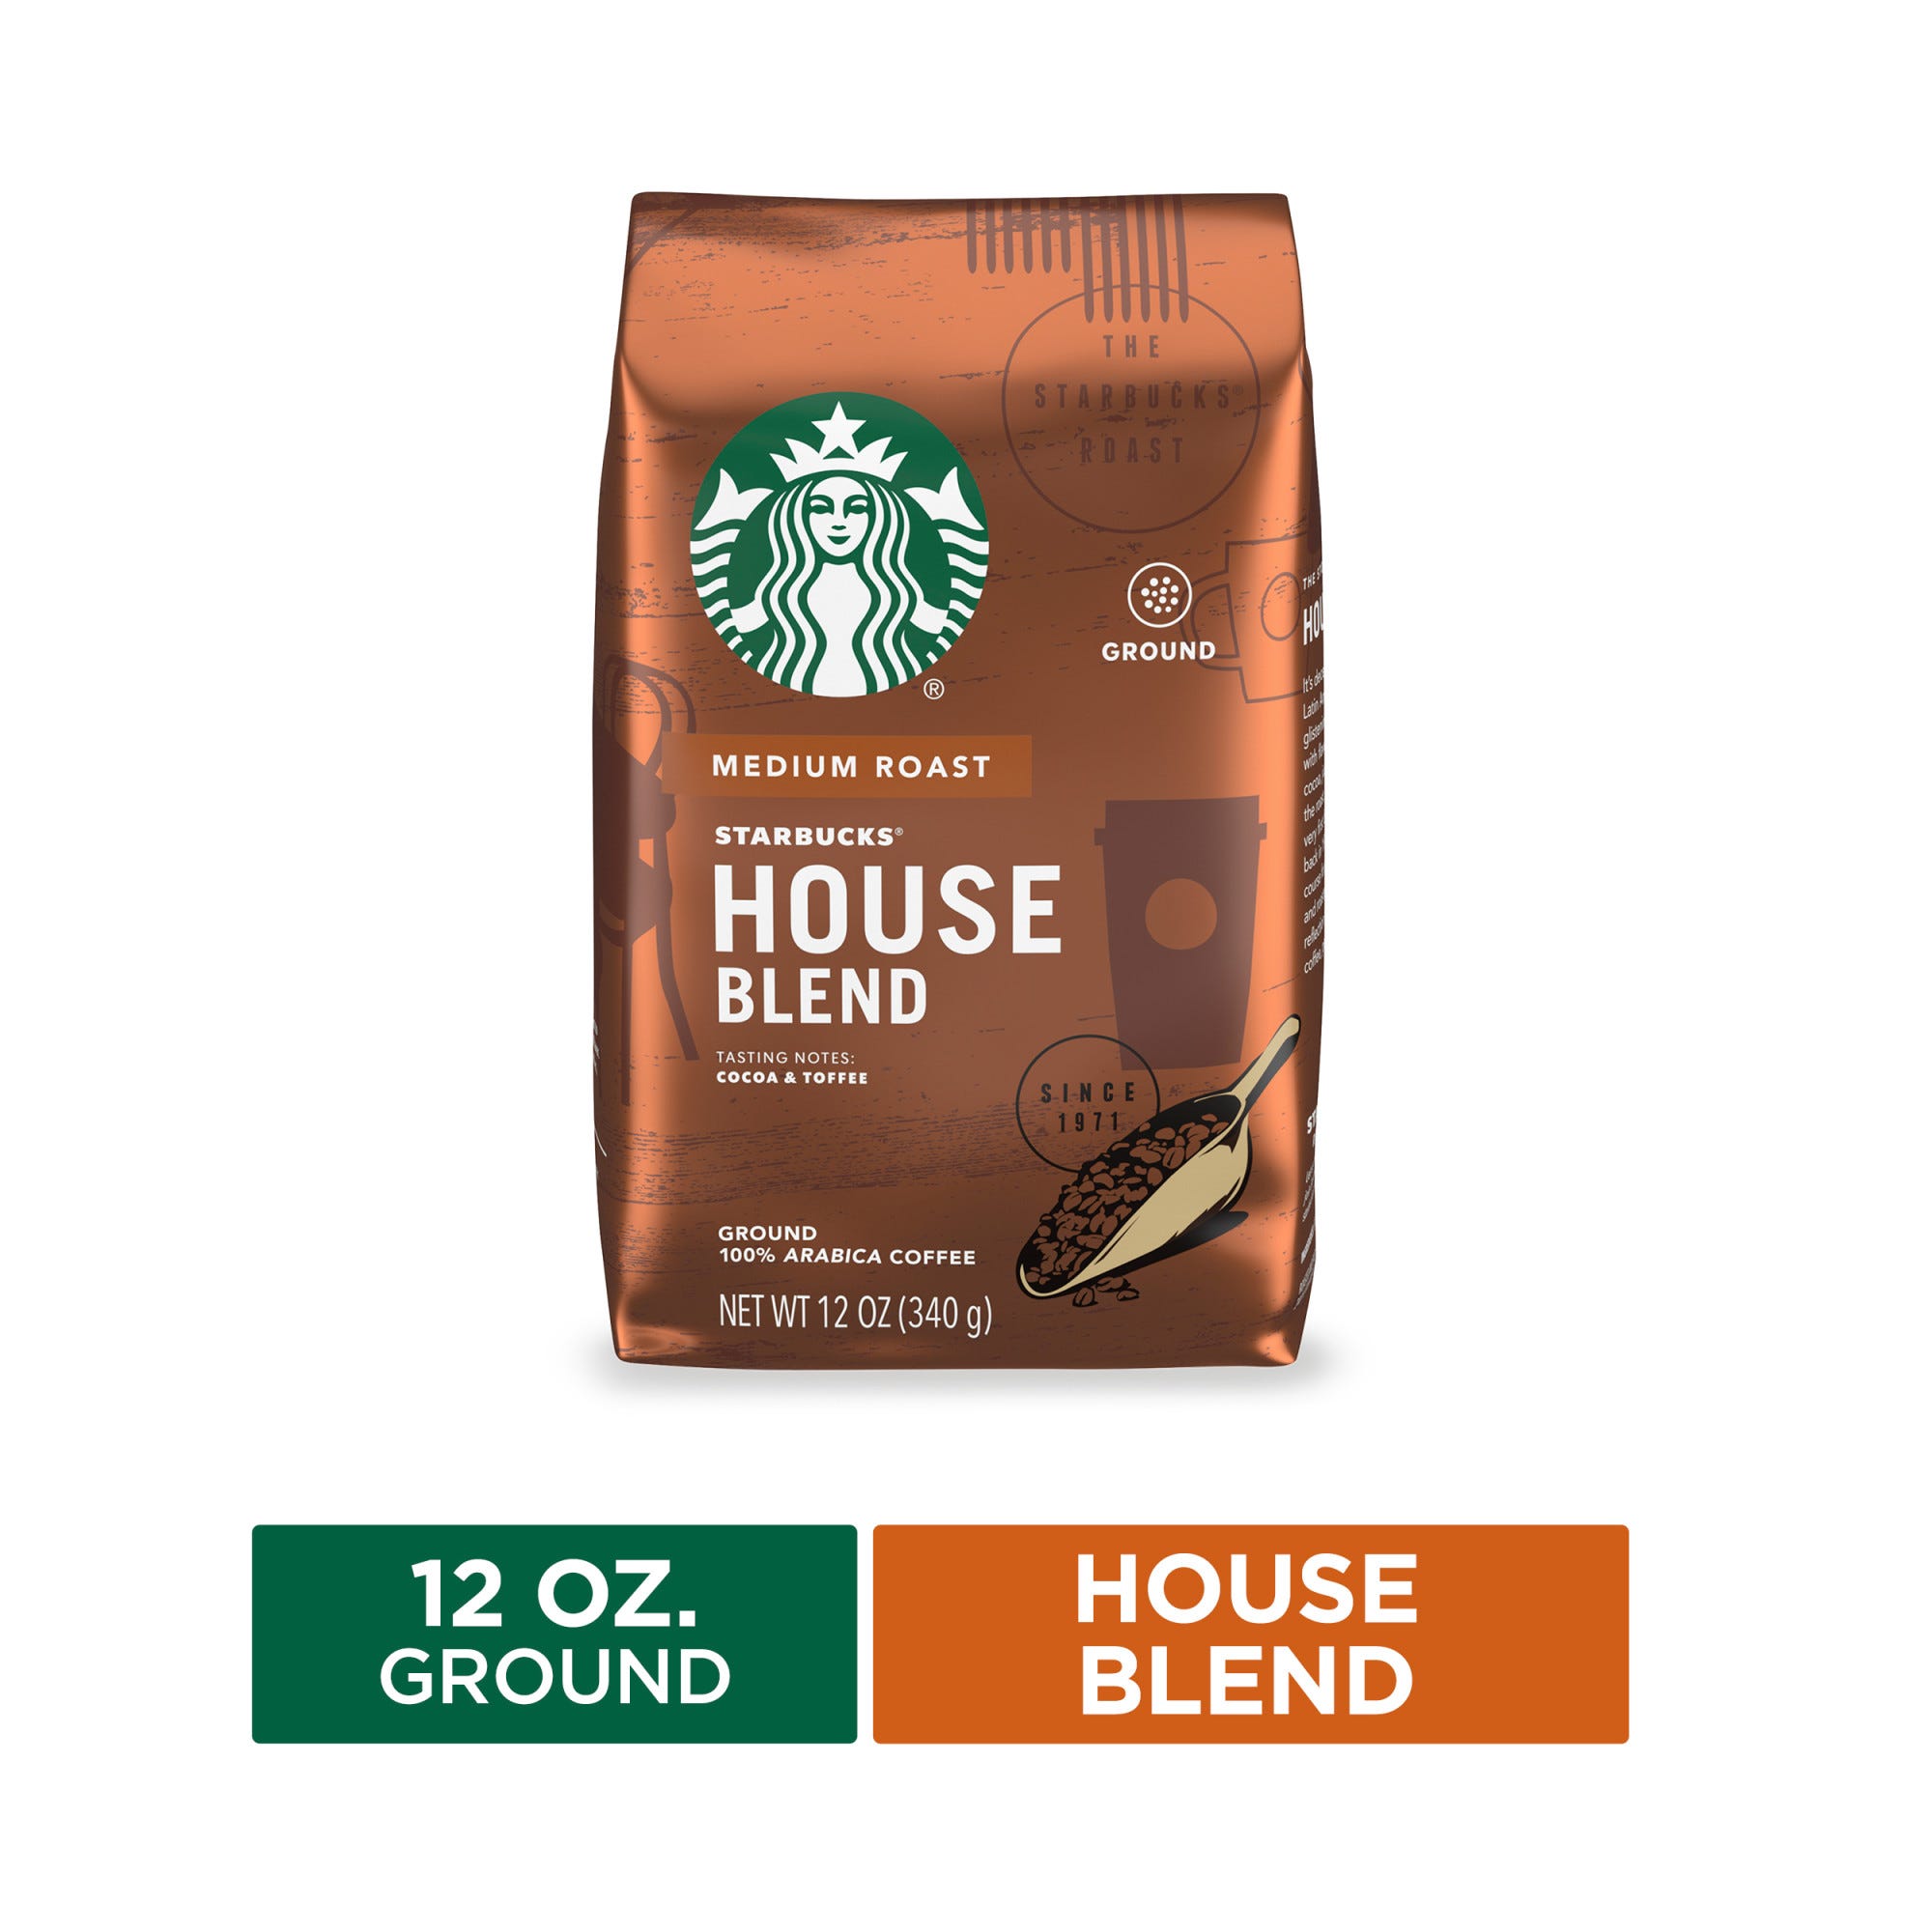 Starbucks Medium Roast Ground Coffee, House Blend - 12 oz